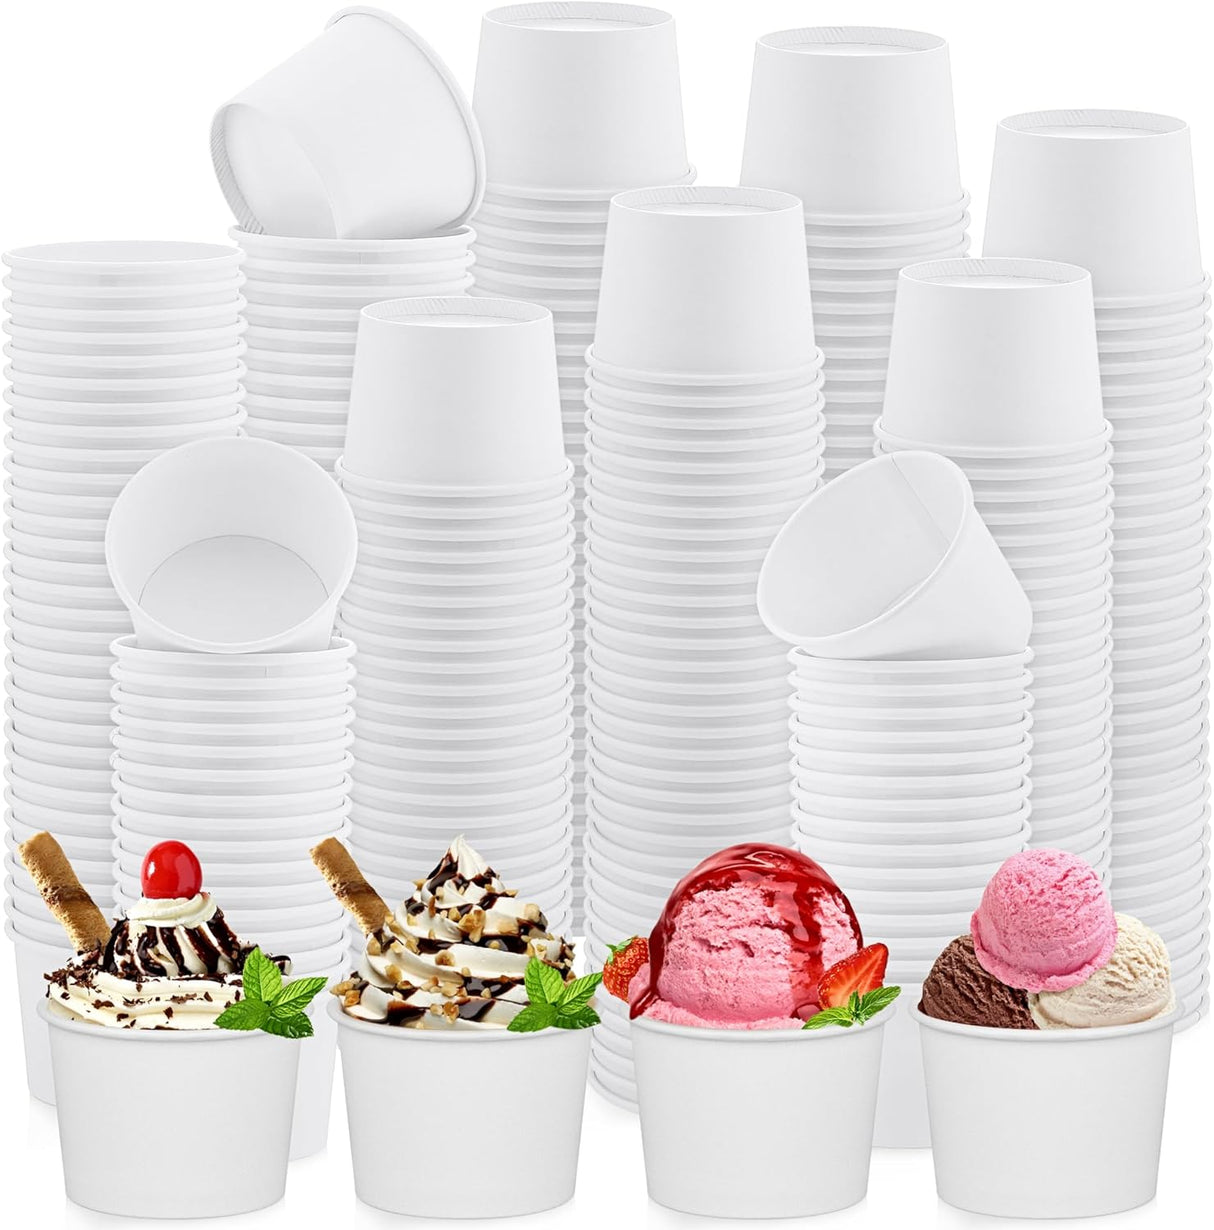 4oz Ice Cream Cups